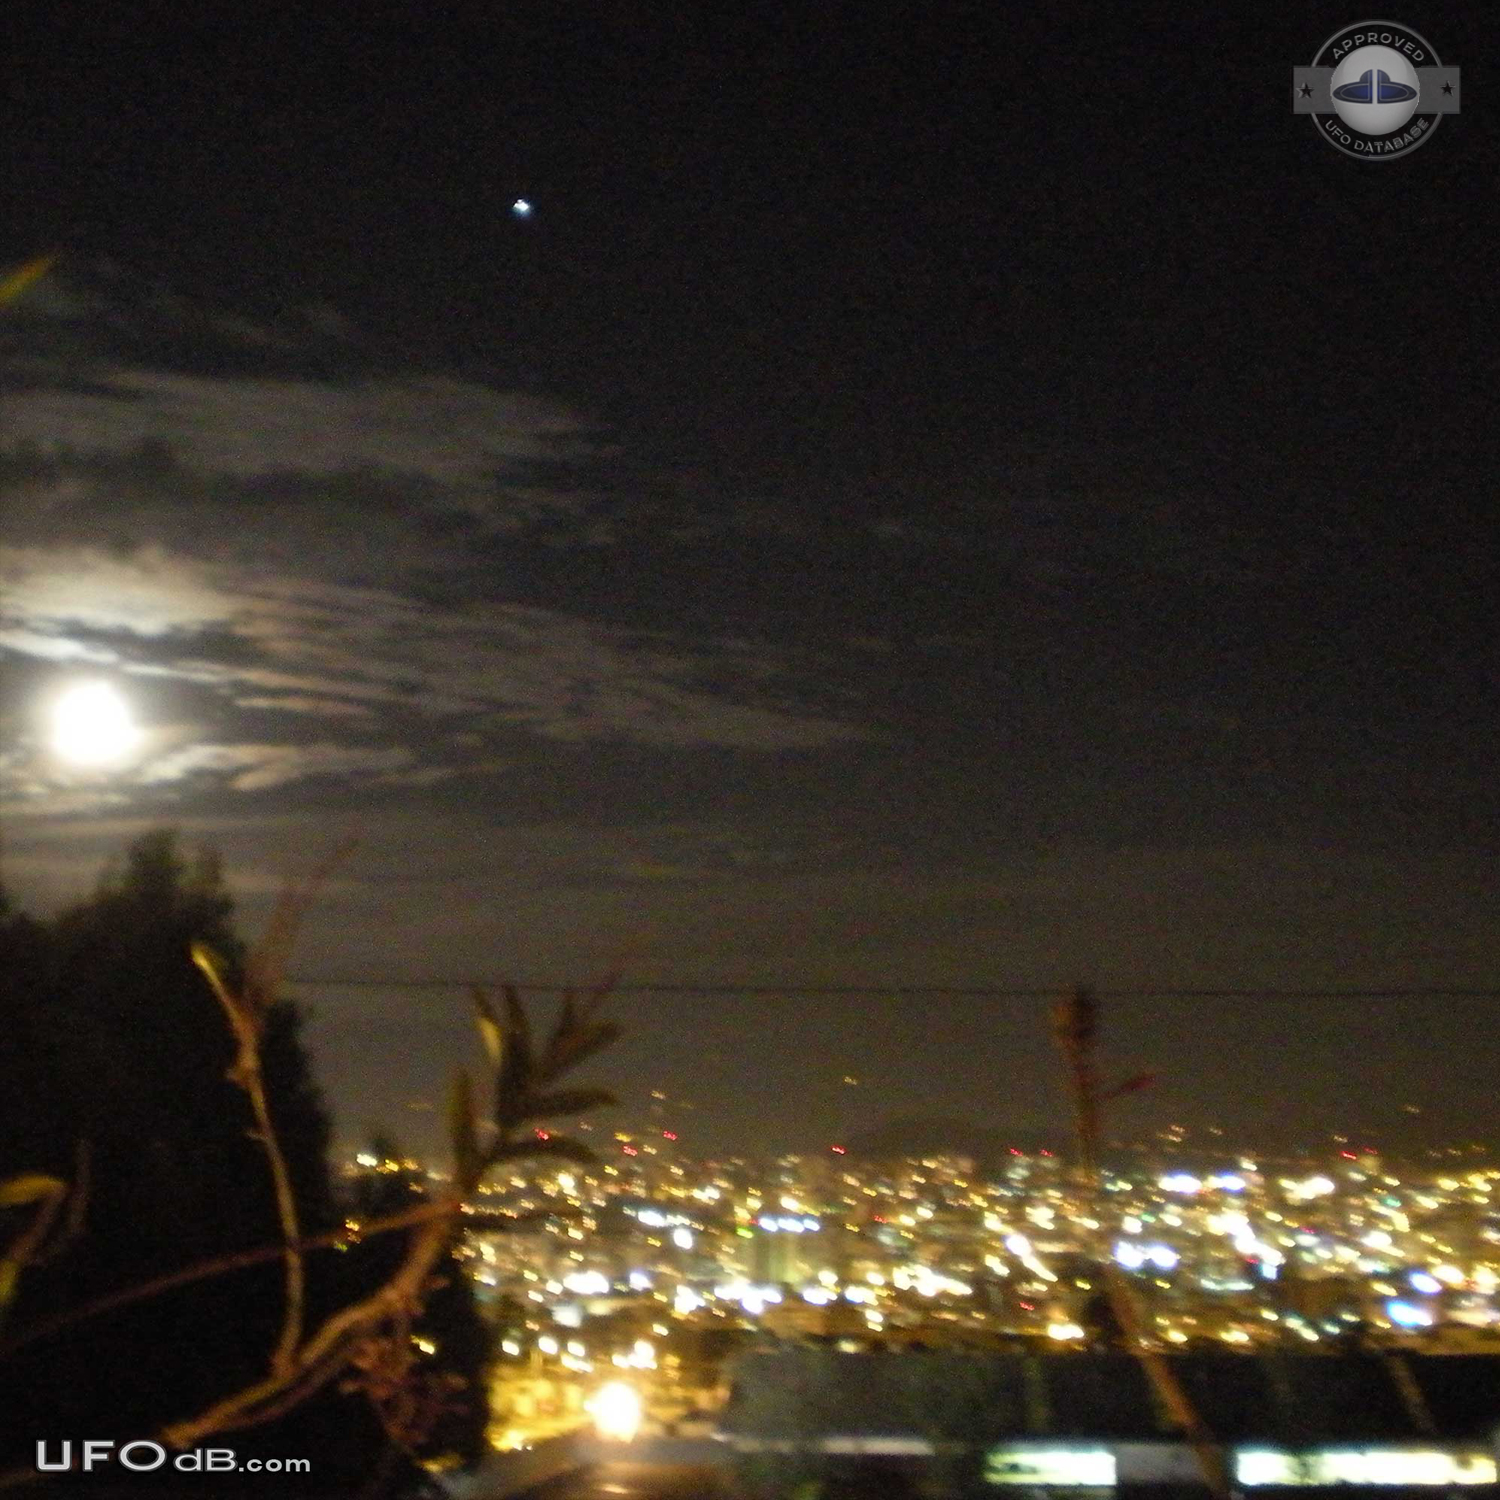 Moon picture reveals bright UFO in the night sky in Ecuador in 2009 UFO Picture #446-1